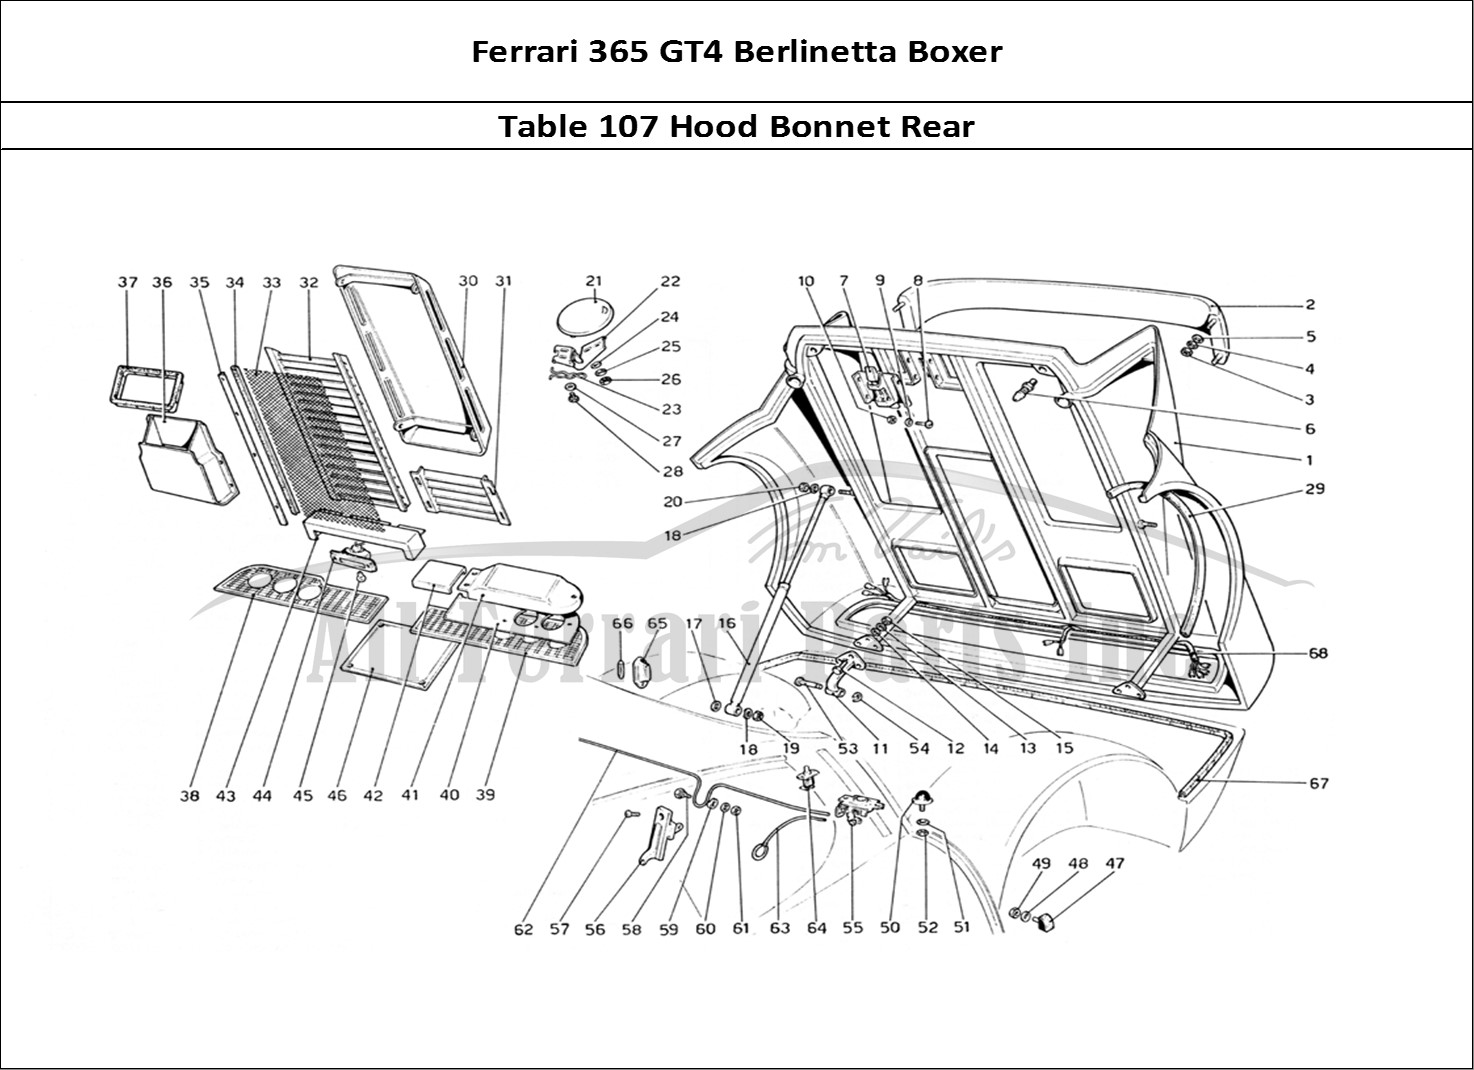 Ferrari Parts Ferrari 365 GT4 Berlinetta Boxer Page 107 Rear Bonnet